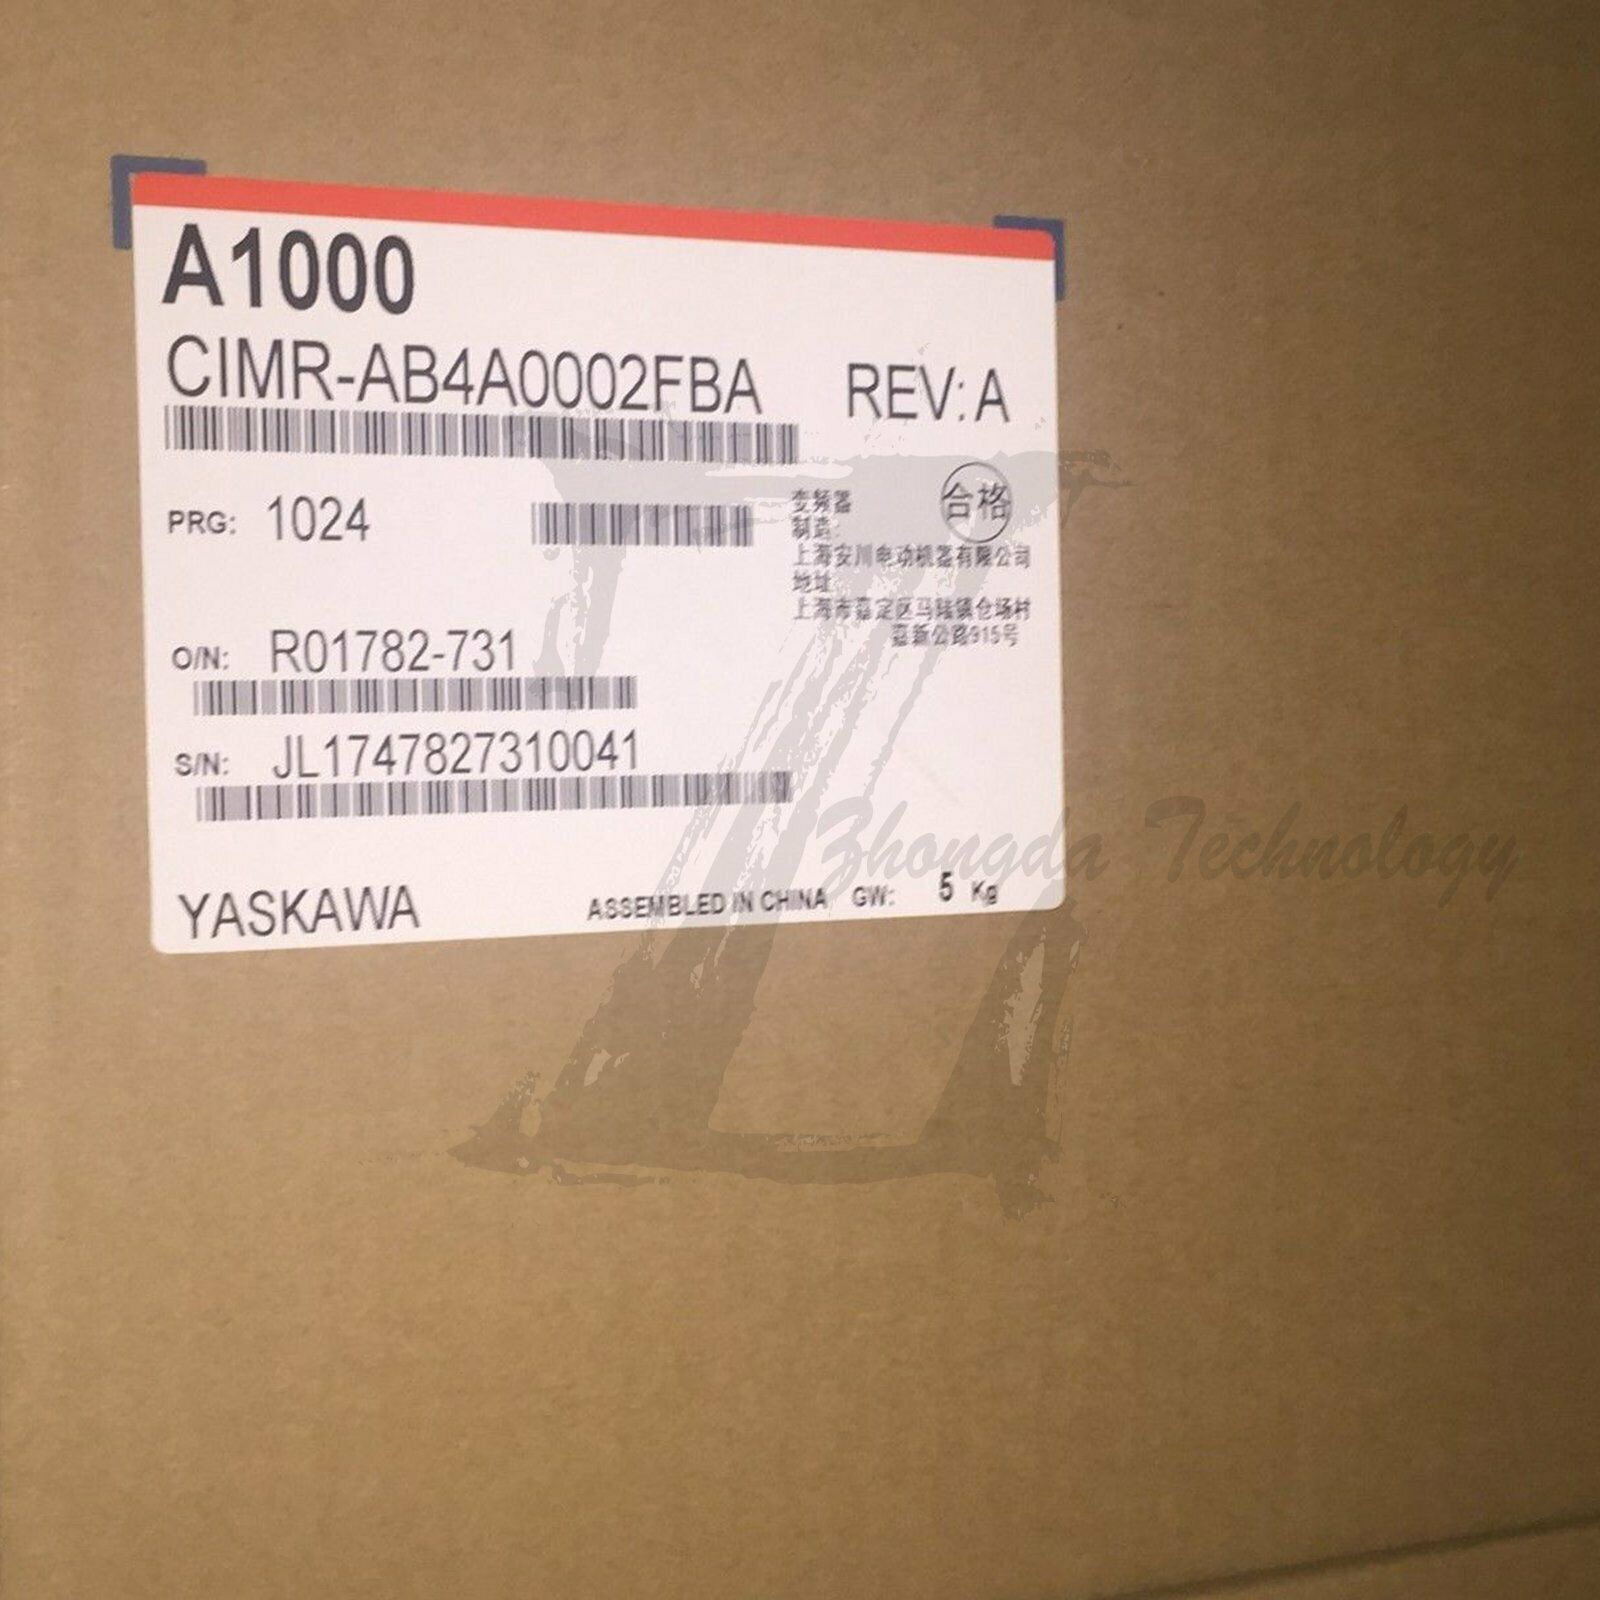 NEW Yaskawa Inverter A1000 Series CIMR-AB4A0002FBA 0.4KW